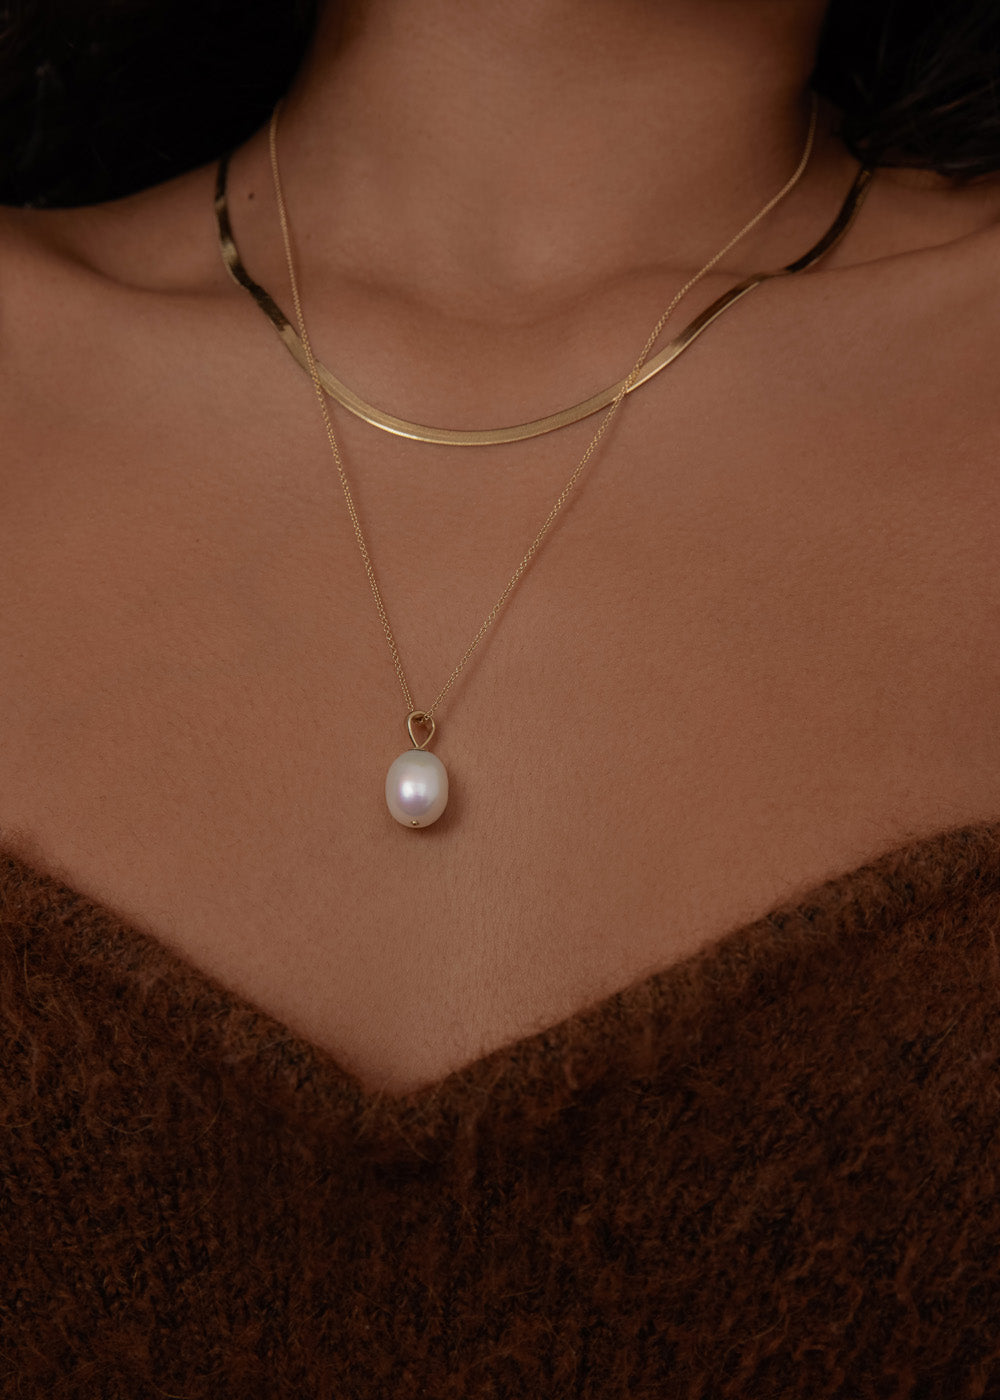 alt="Carter Flat Herringbone Chain II and Baroque Pearl Drop Necklace"